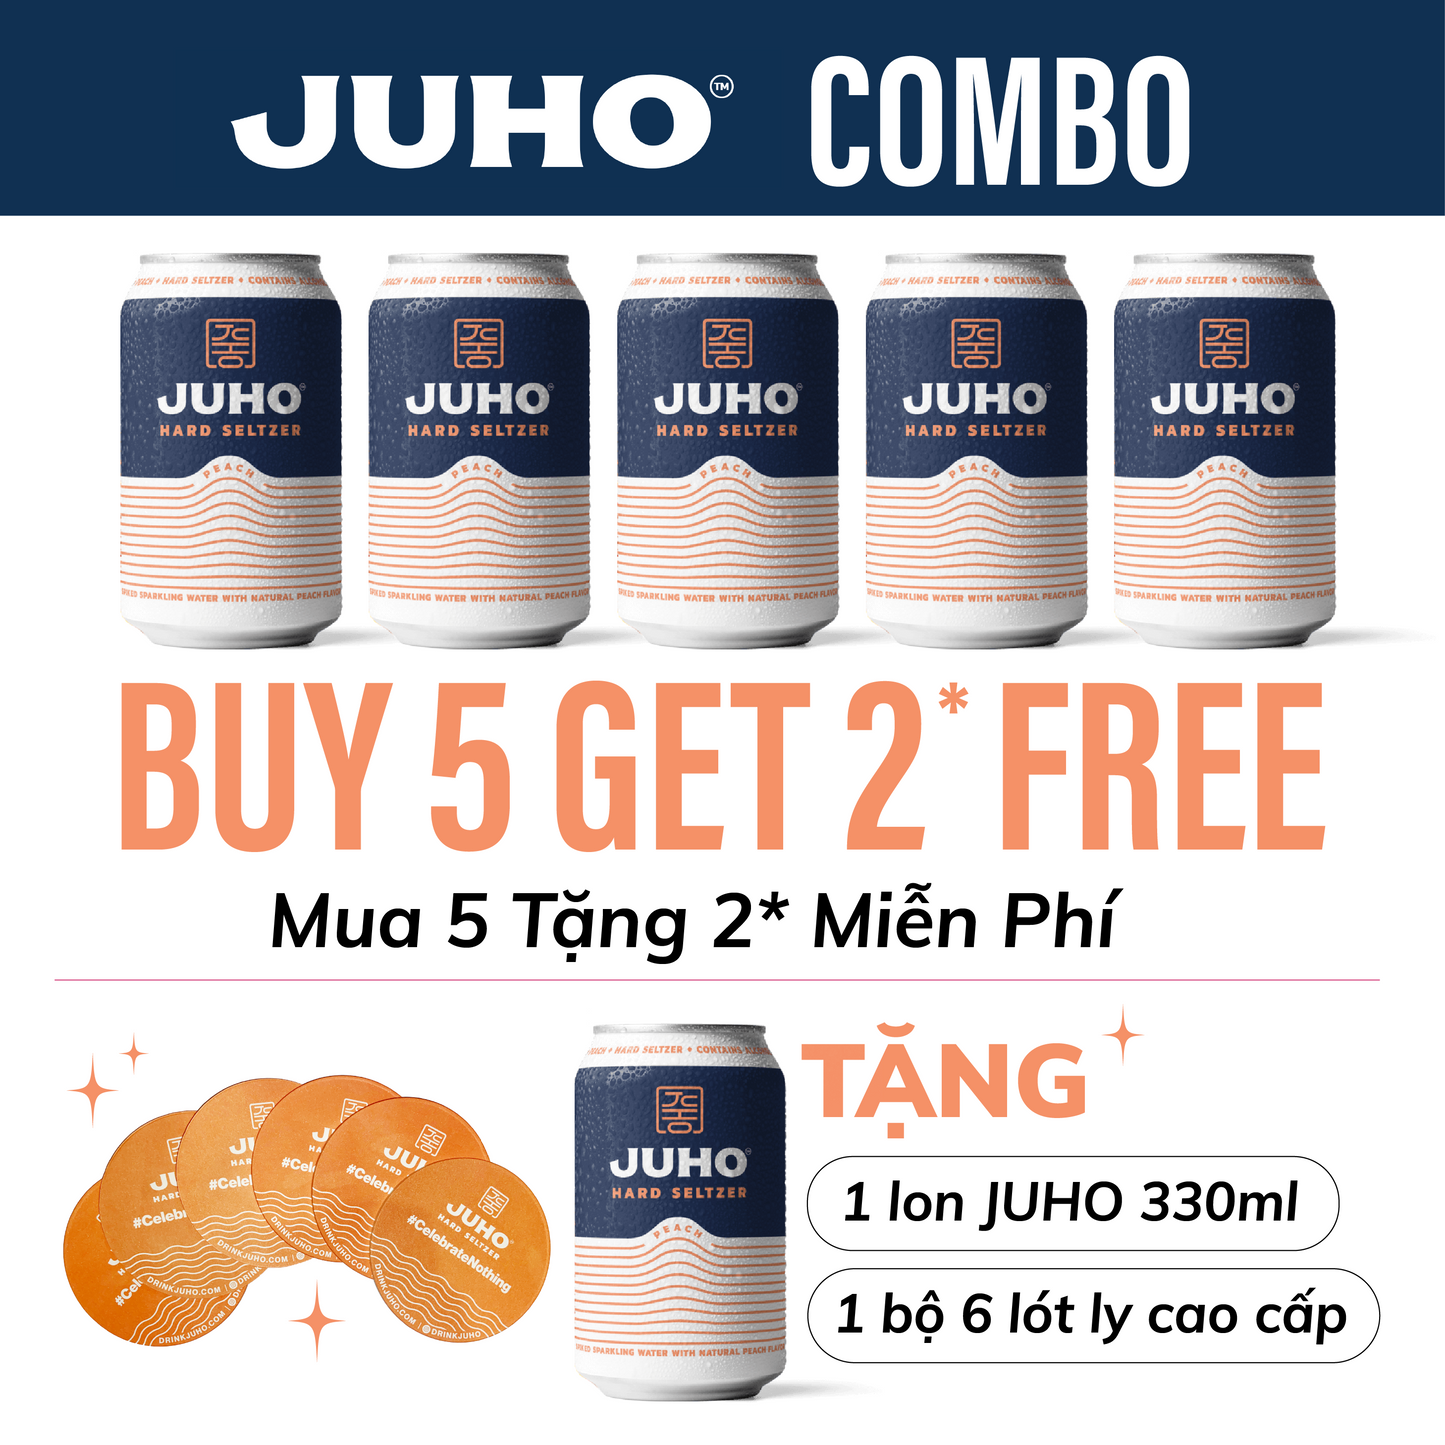 JUHO - COMBO 6 PACK